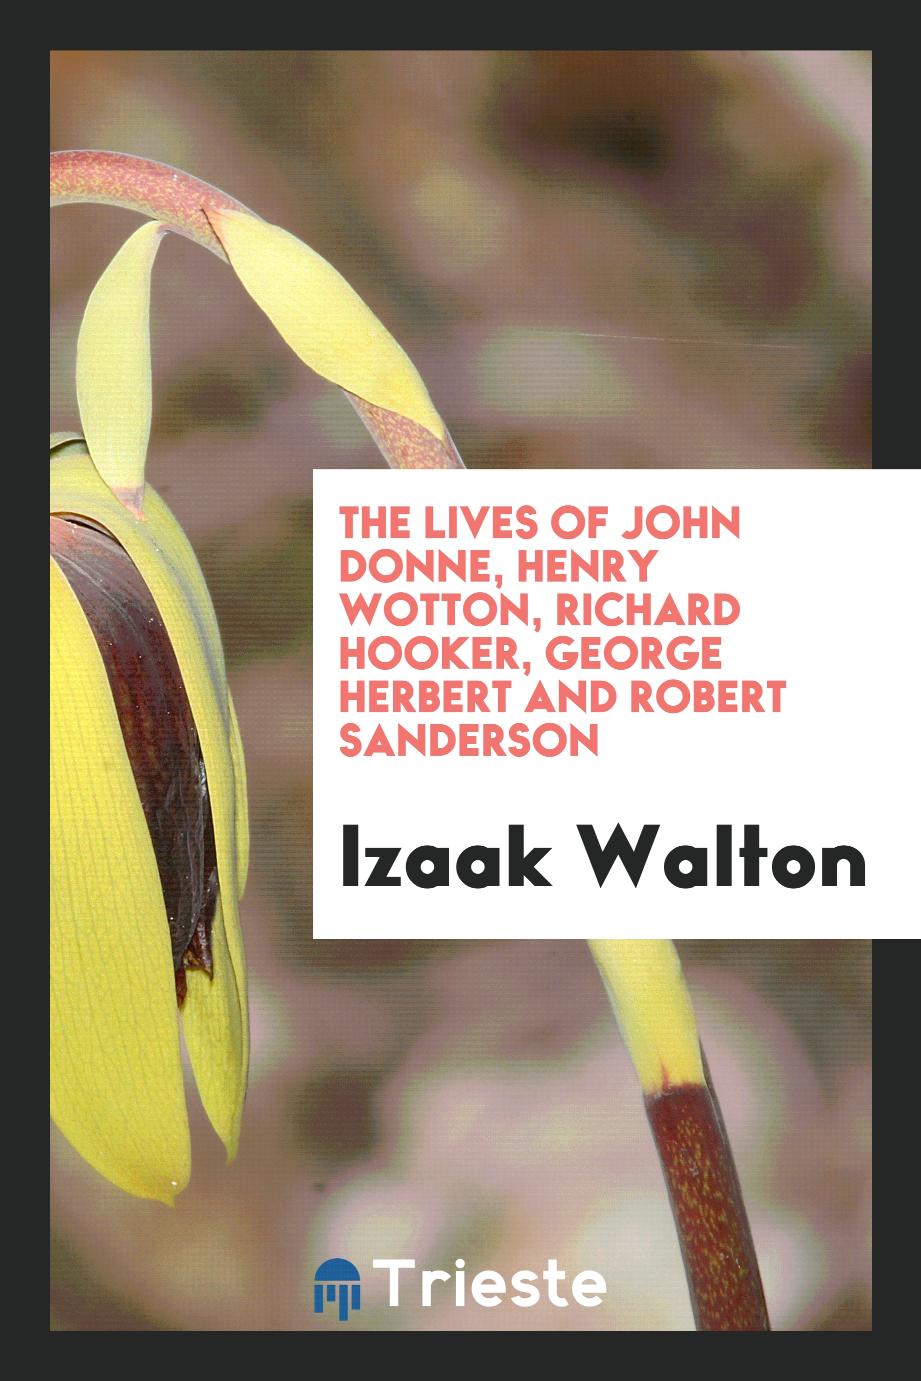 The Lives of John Donne, Henry Wotton, Richard Hooker, George Herbert and Robert Sanderson